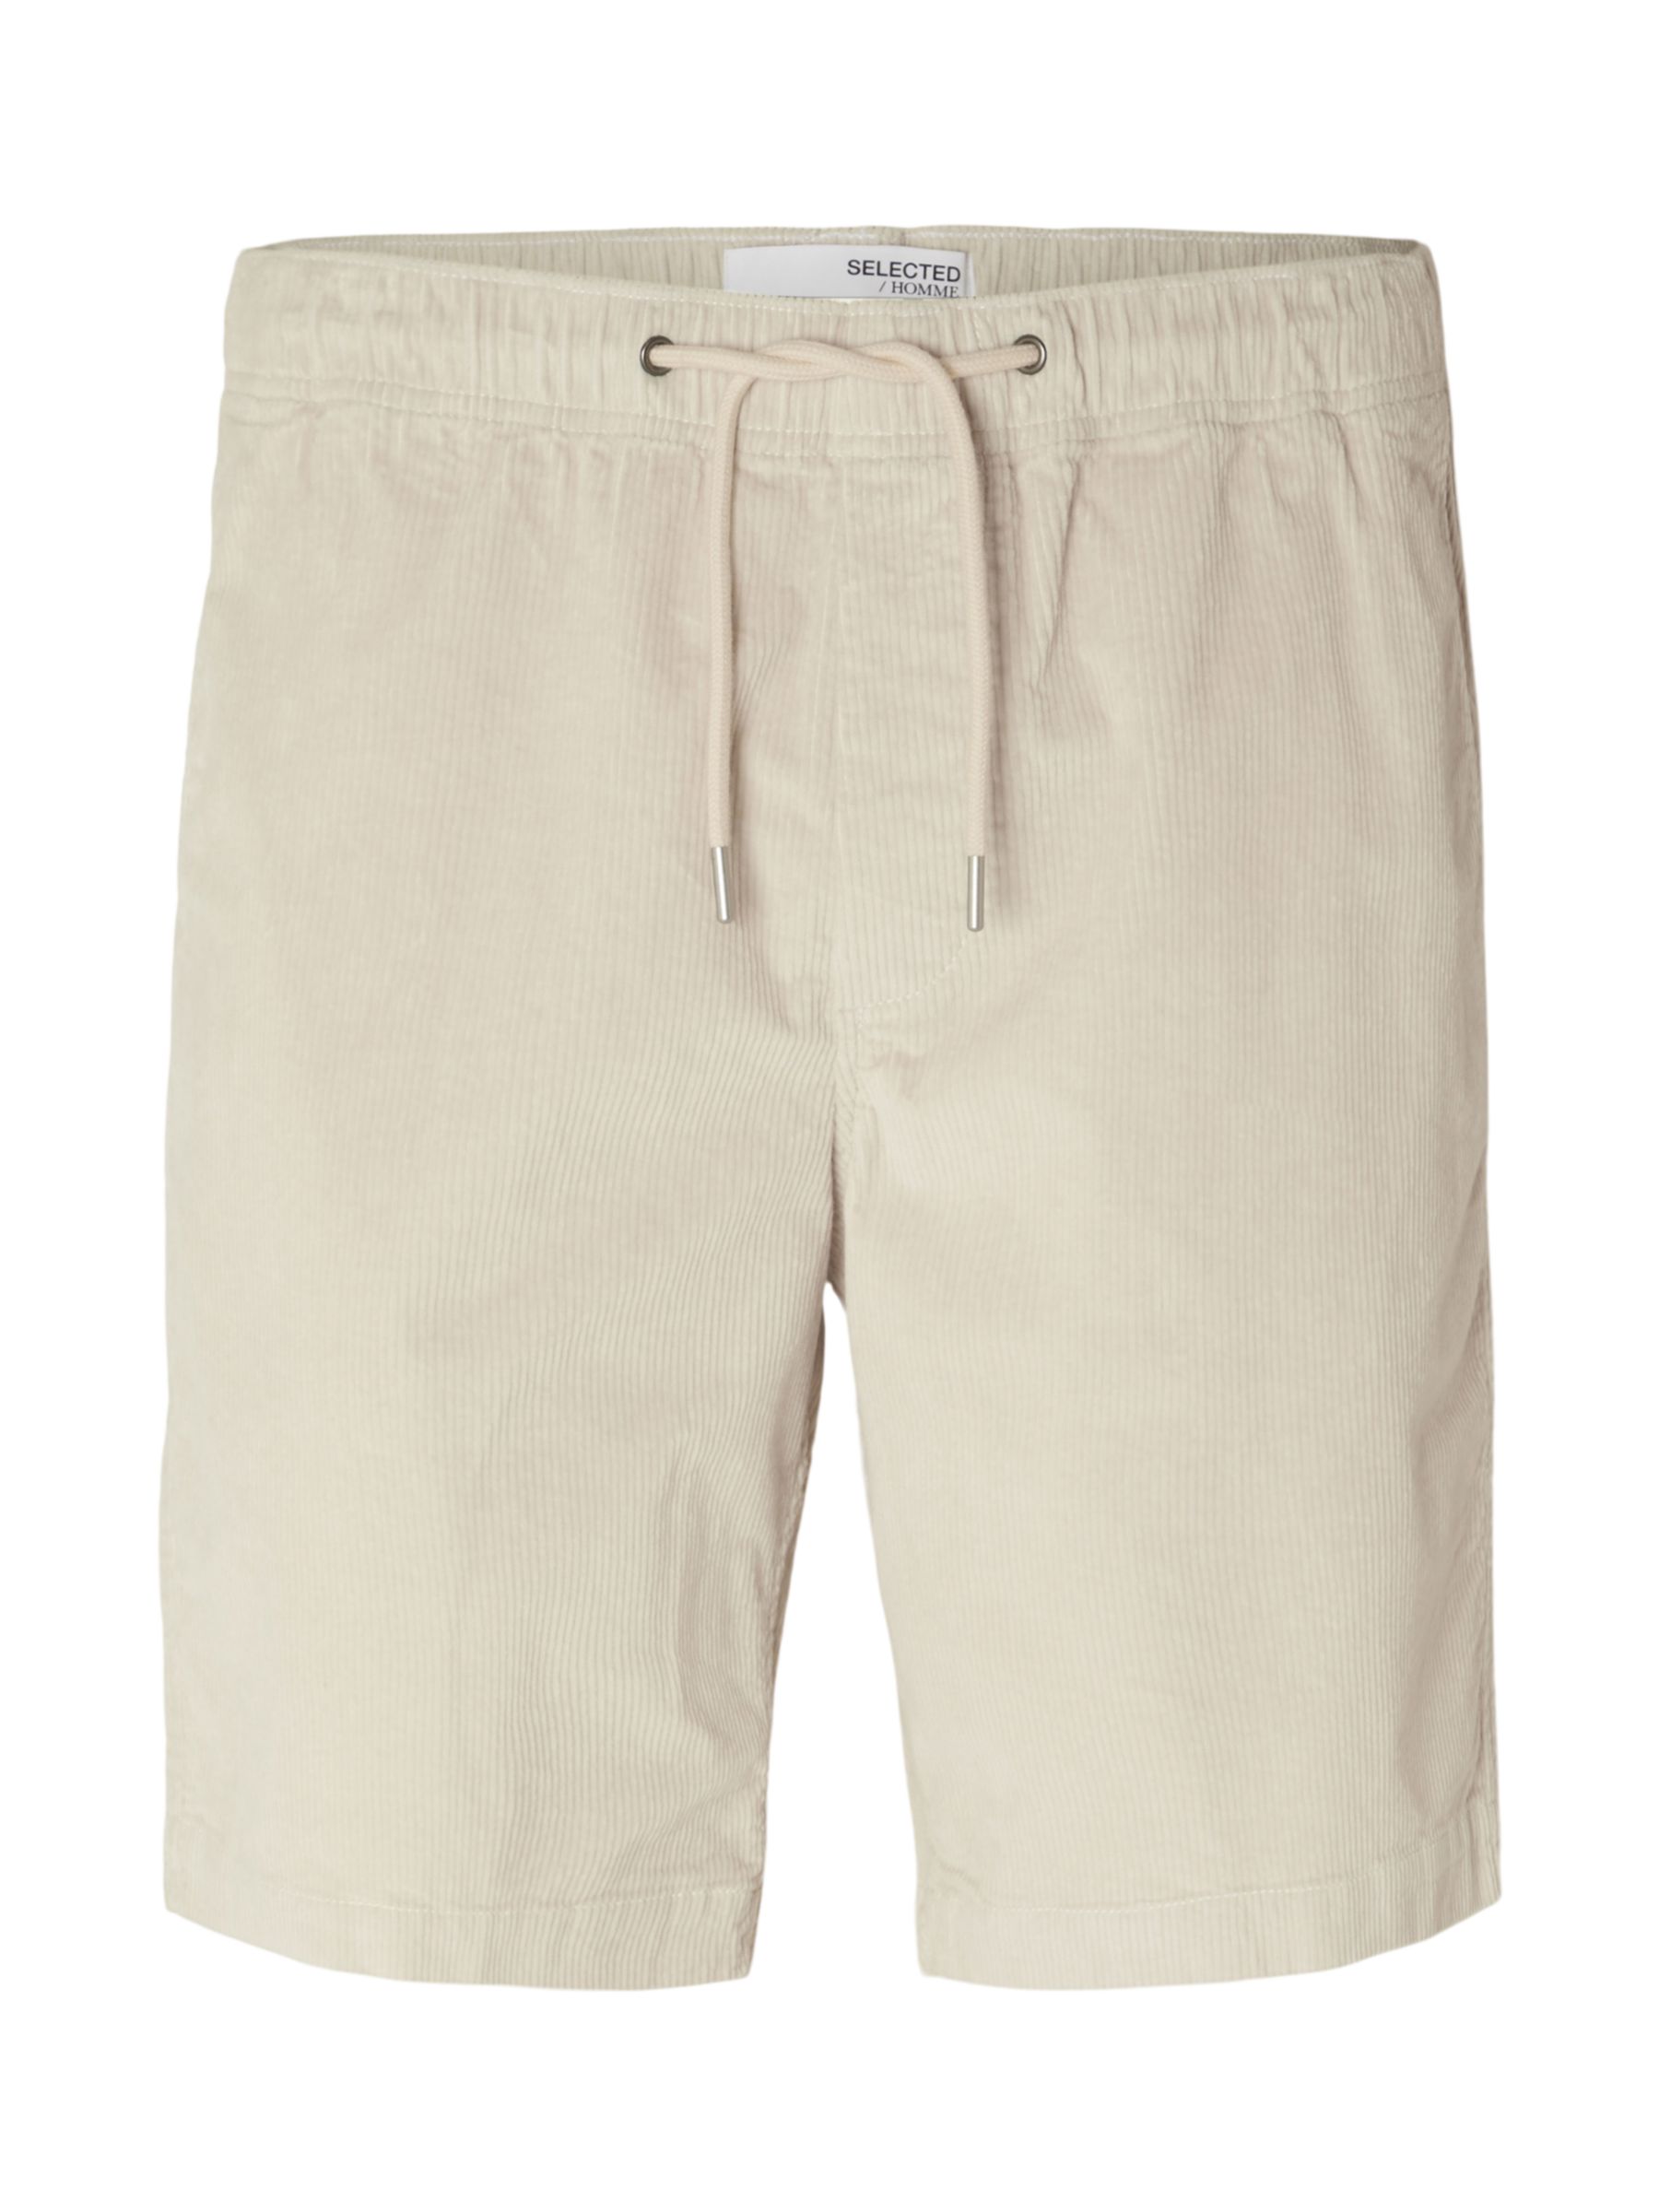 Buy SELECTED HOMME Corduroy Shorts, Fog Online at johnlewis.com